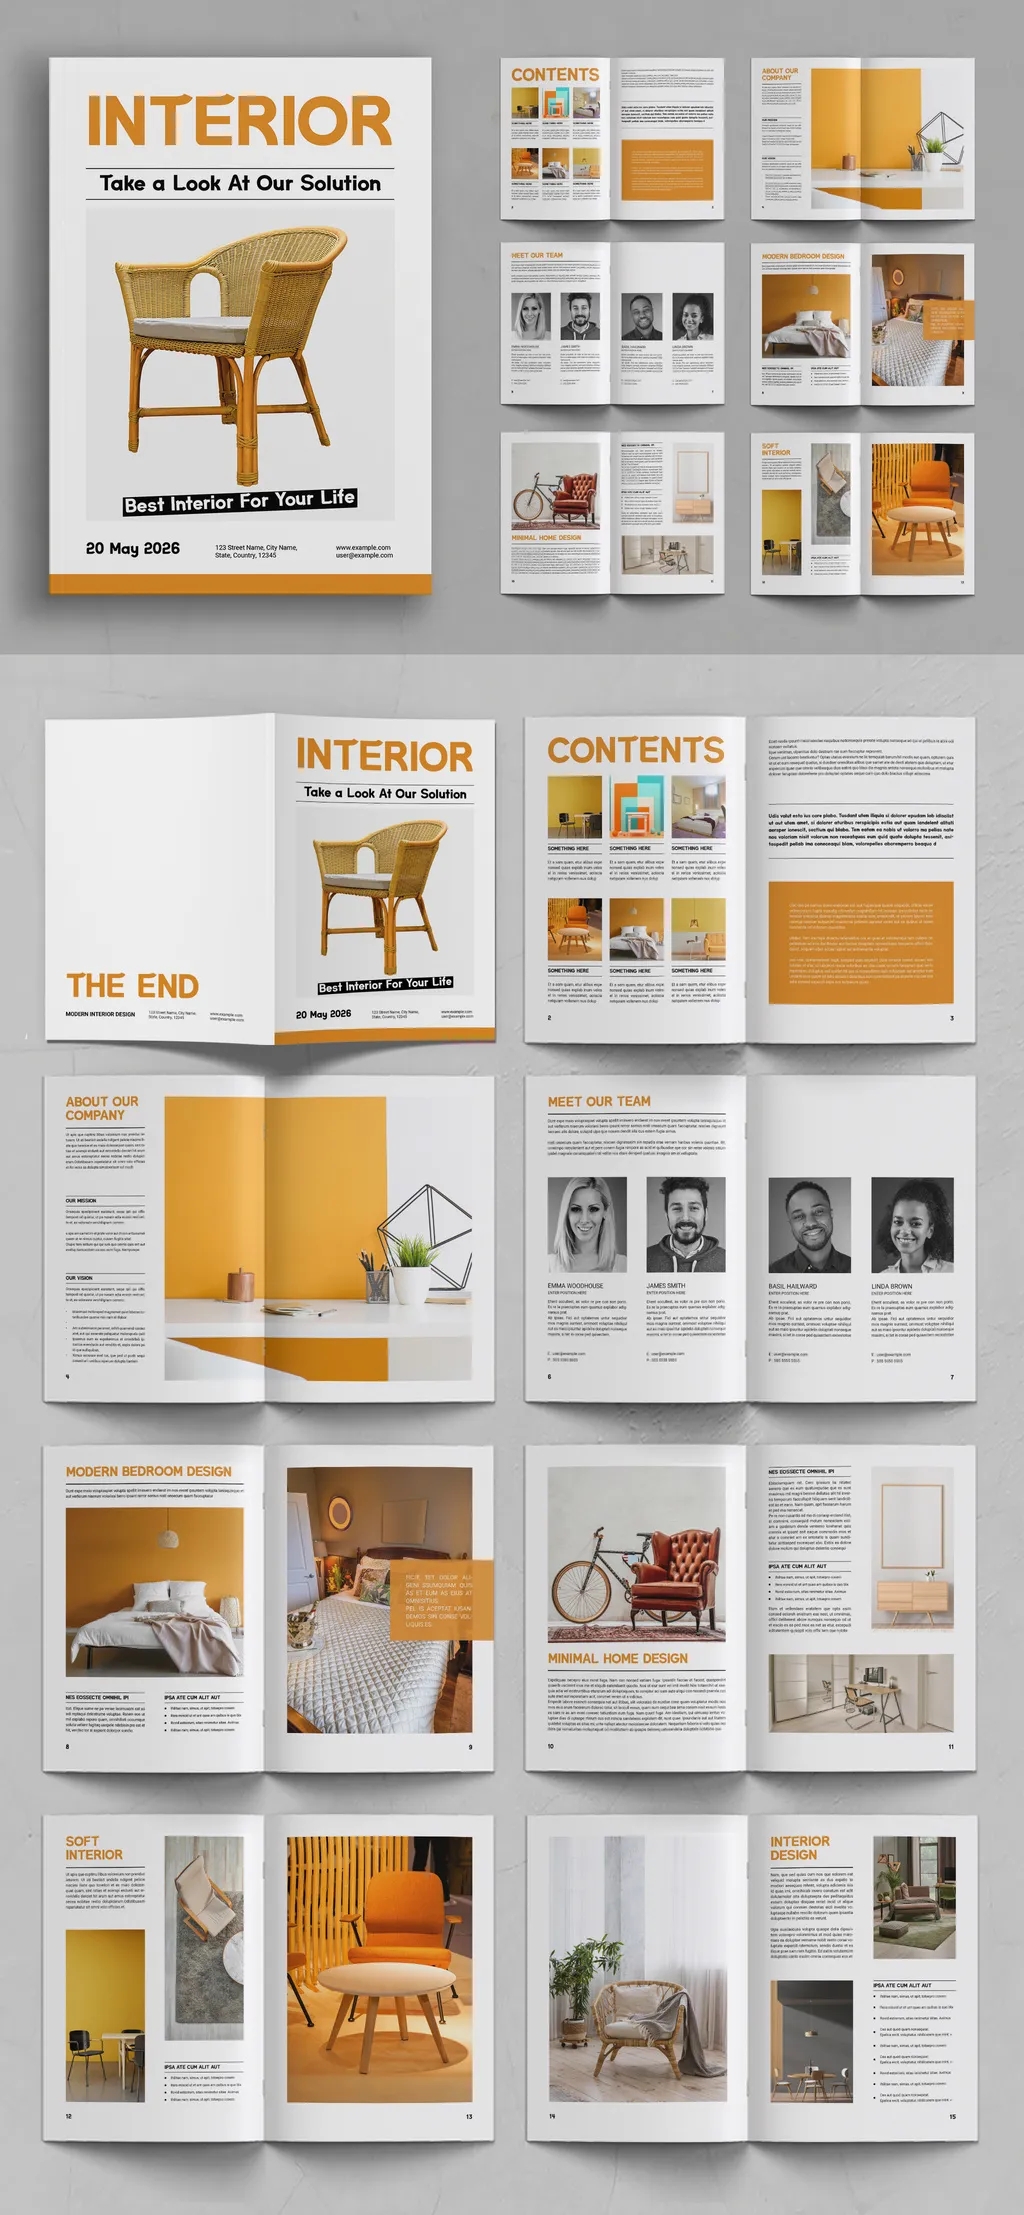 Adobestock - Interior Design Magazine Template 725281958